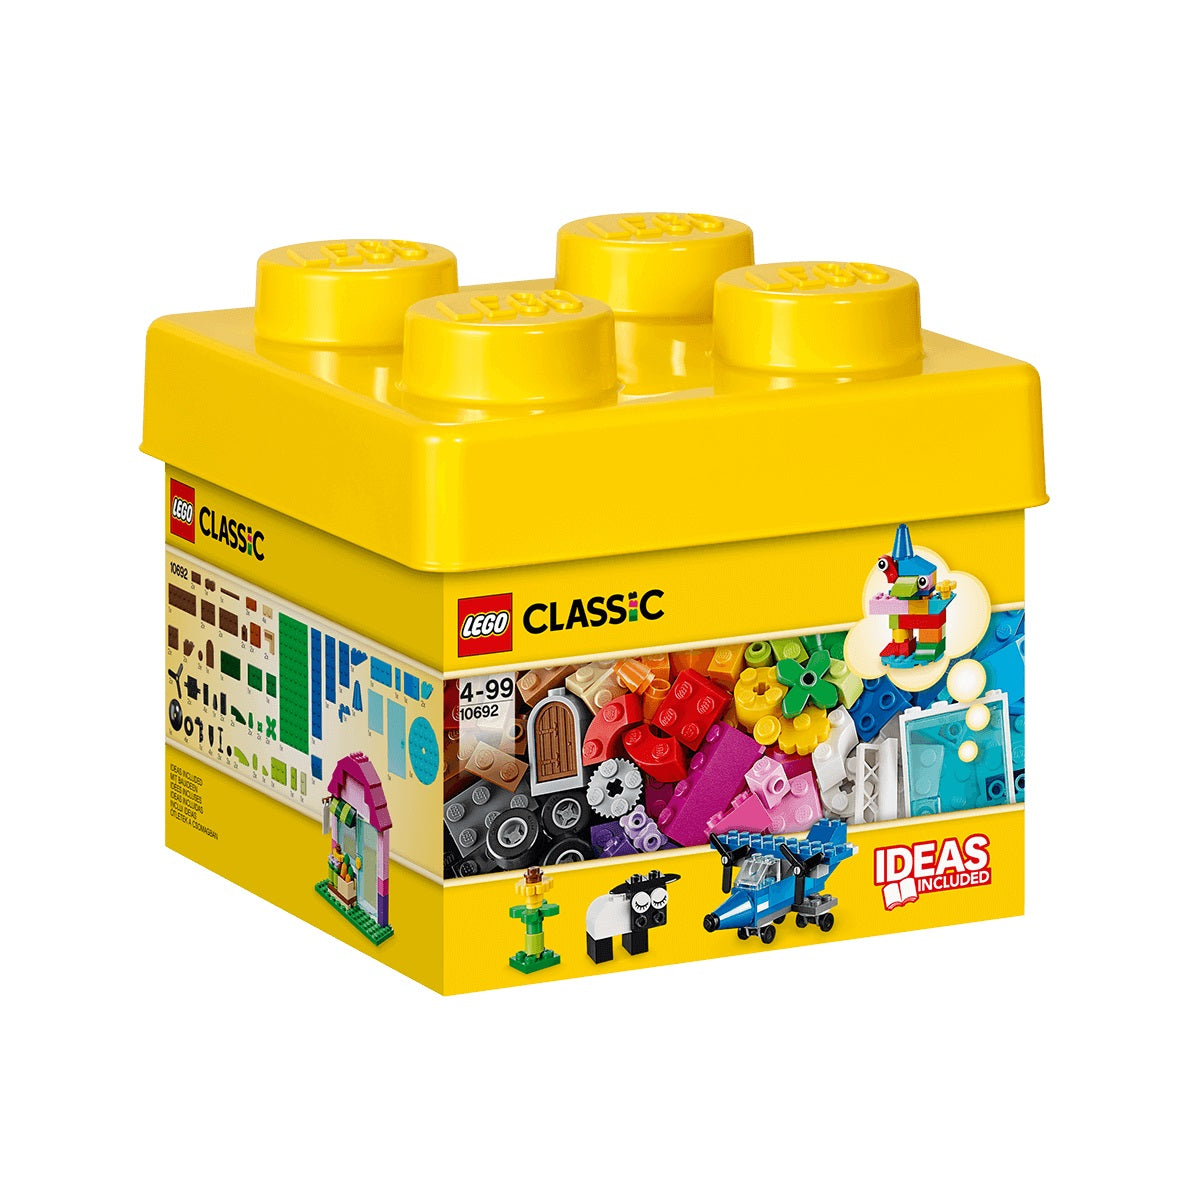 LEGO Ninjago X-1 Ninja Charger - 71737